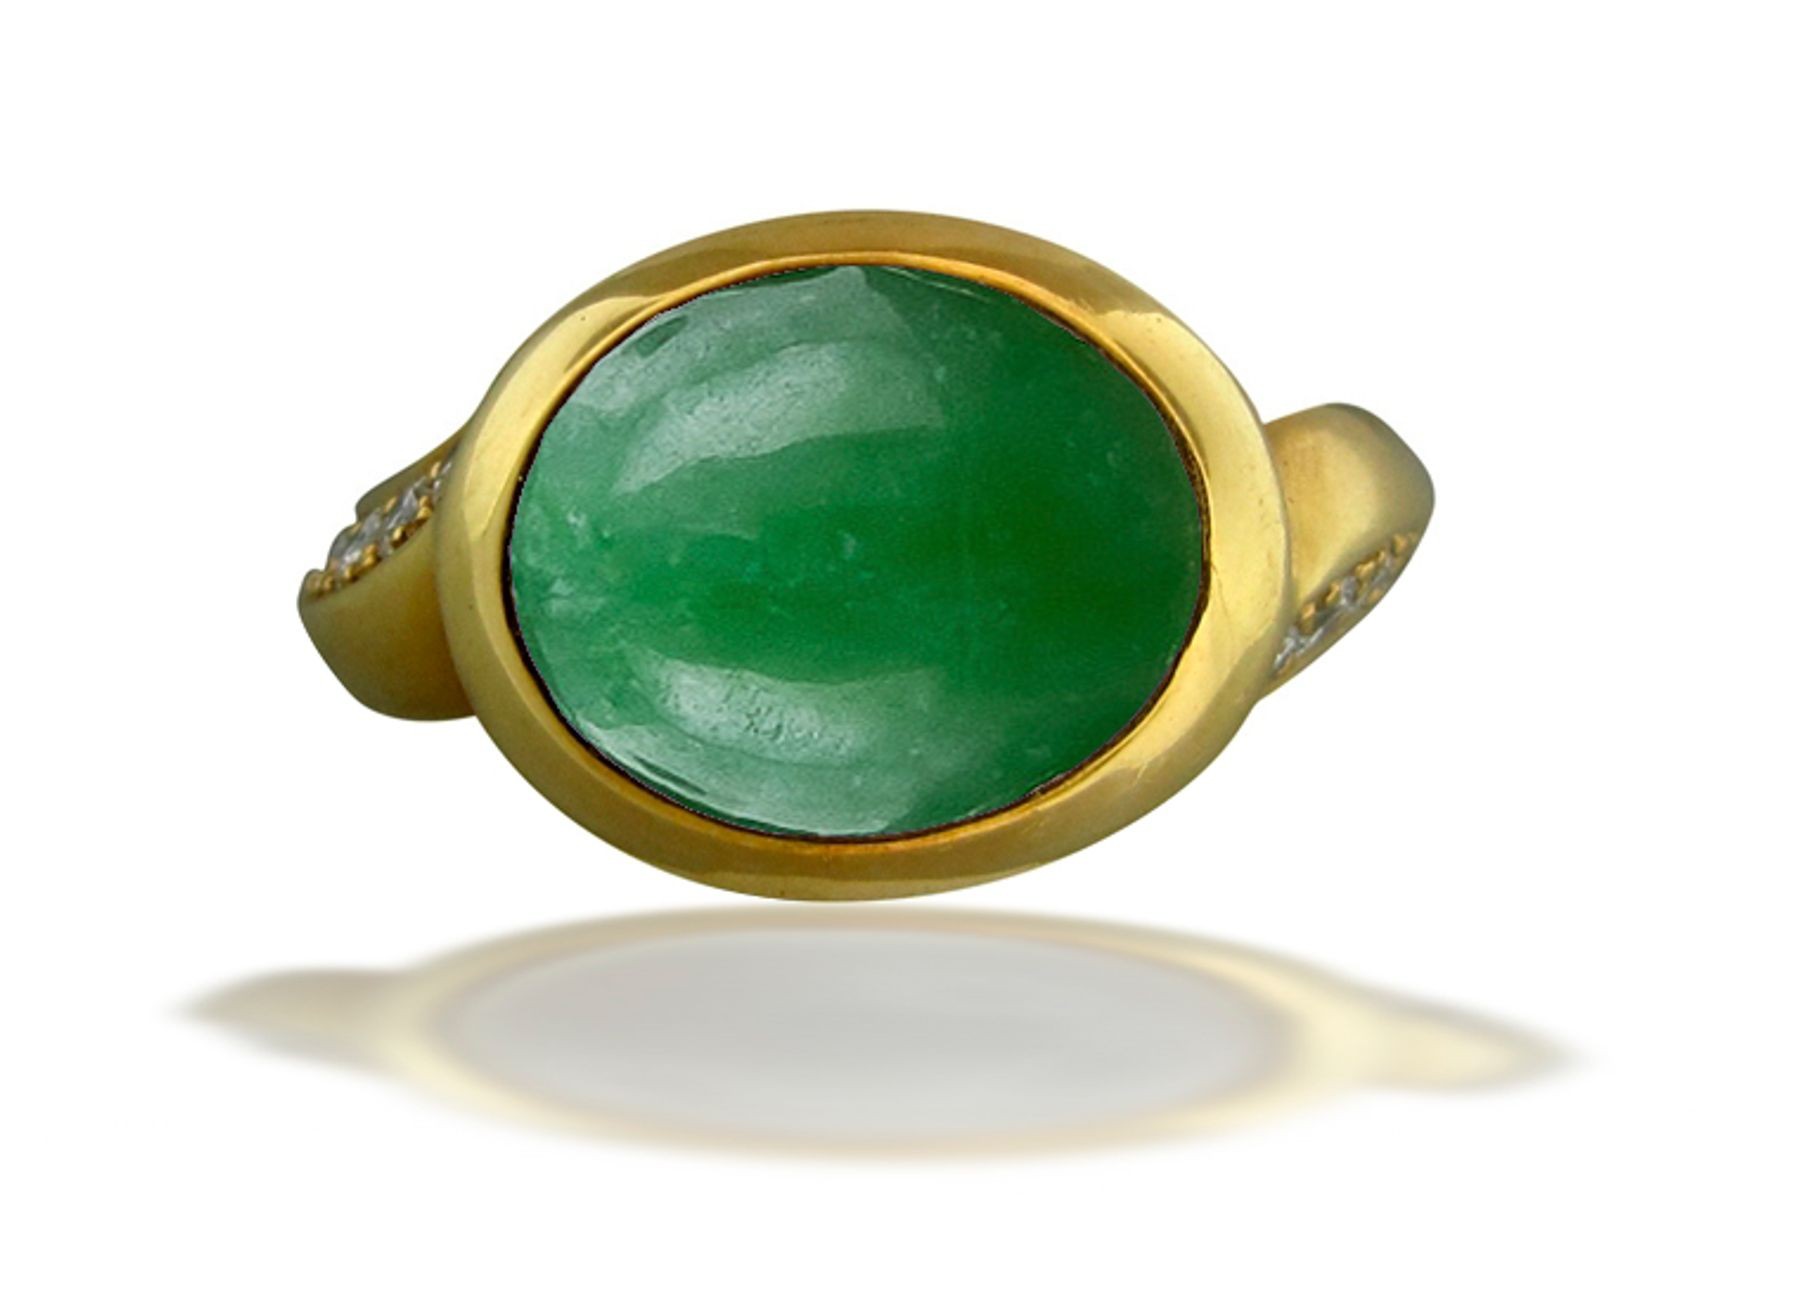 Special Design Art Nouveau Gold "Vibrant" Natural Color Deep Candy Apple Green Jadeite Burma Jade Ring